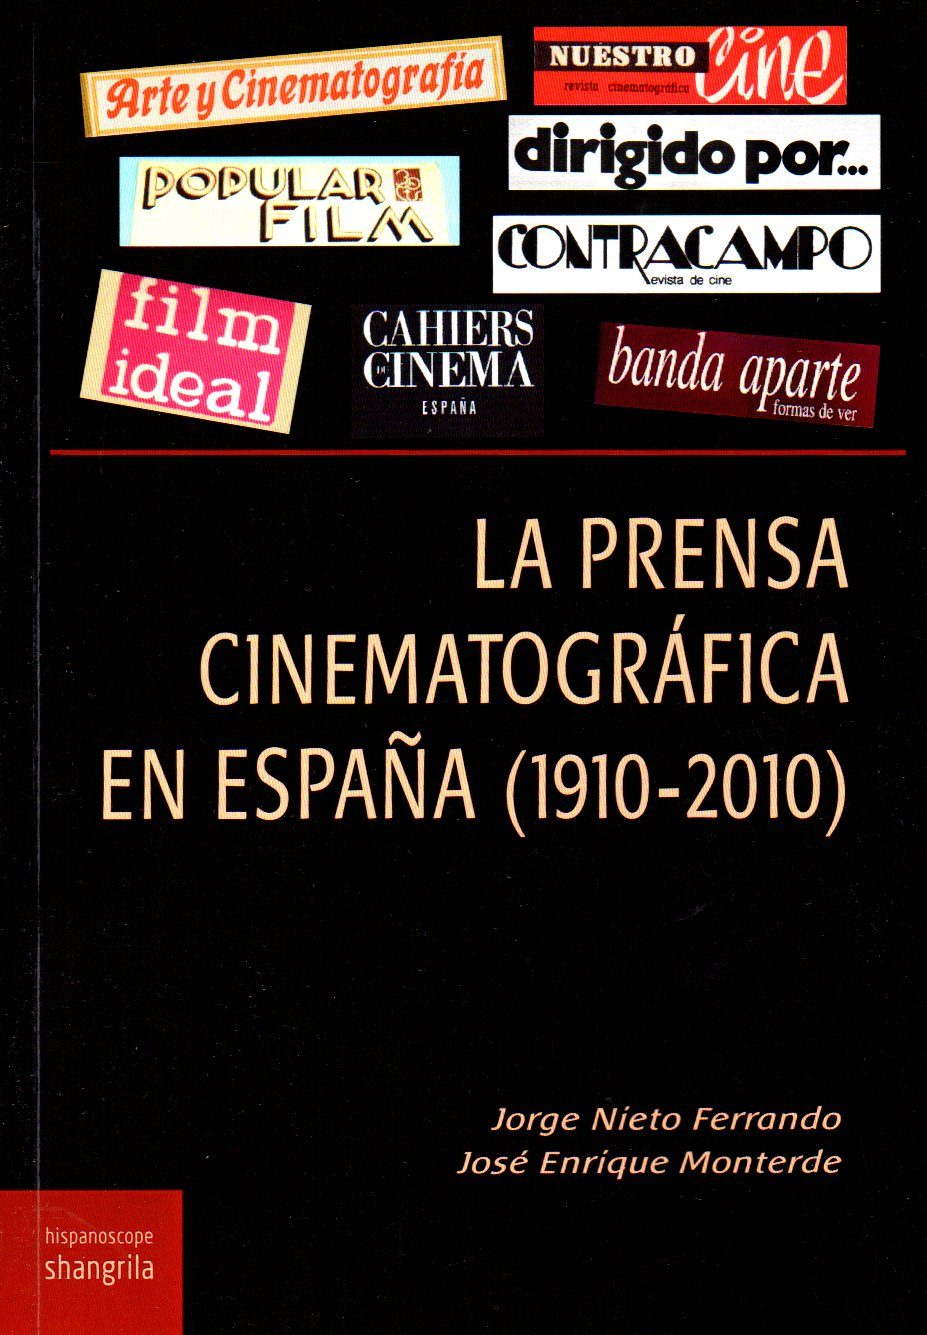 La prensa cinematográfica en España 